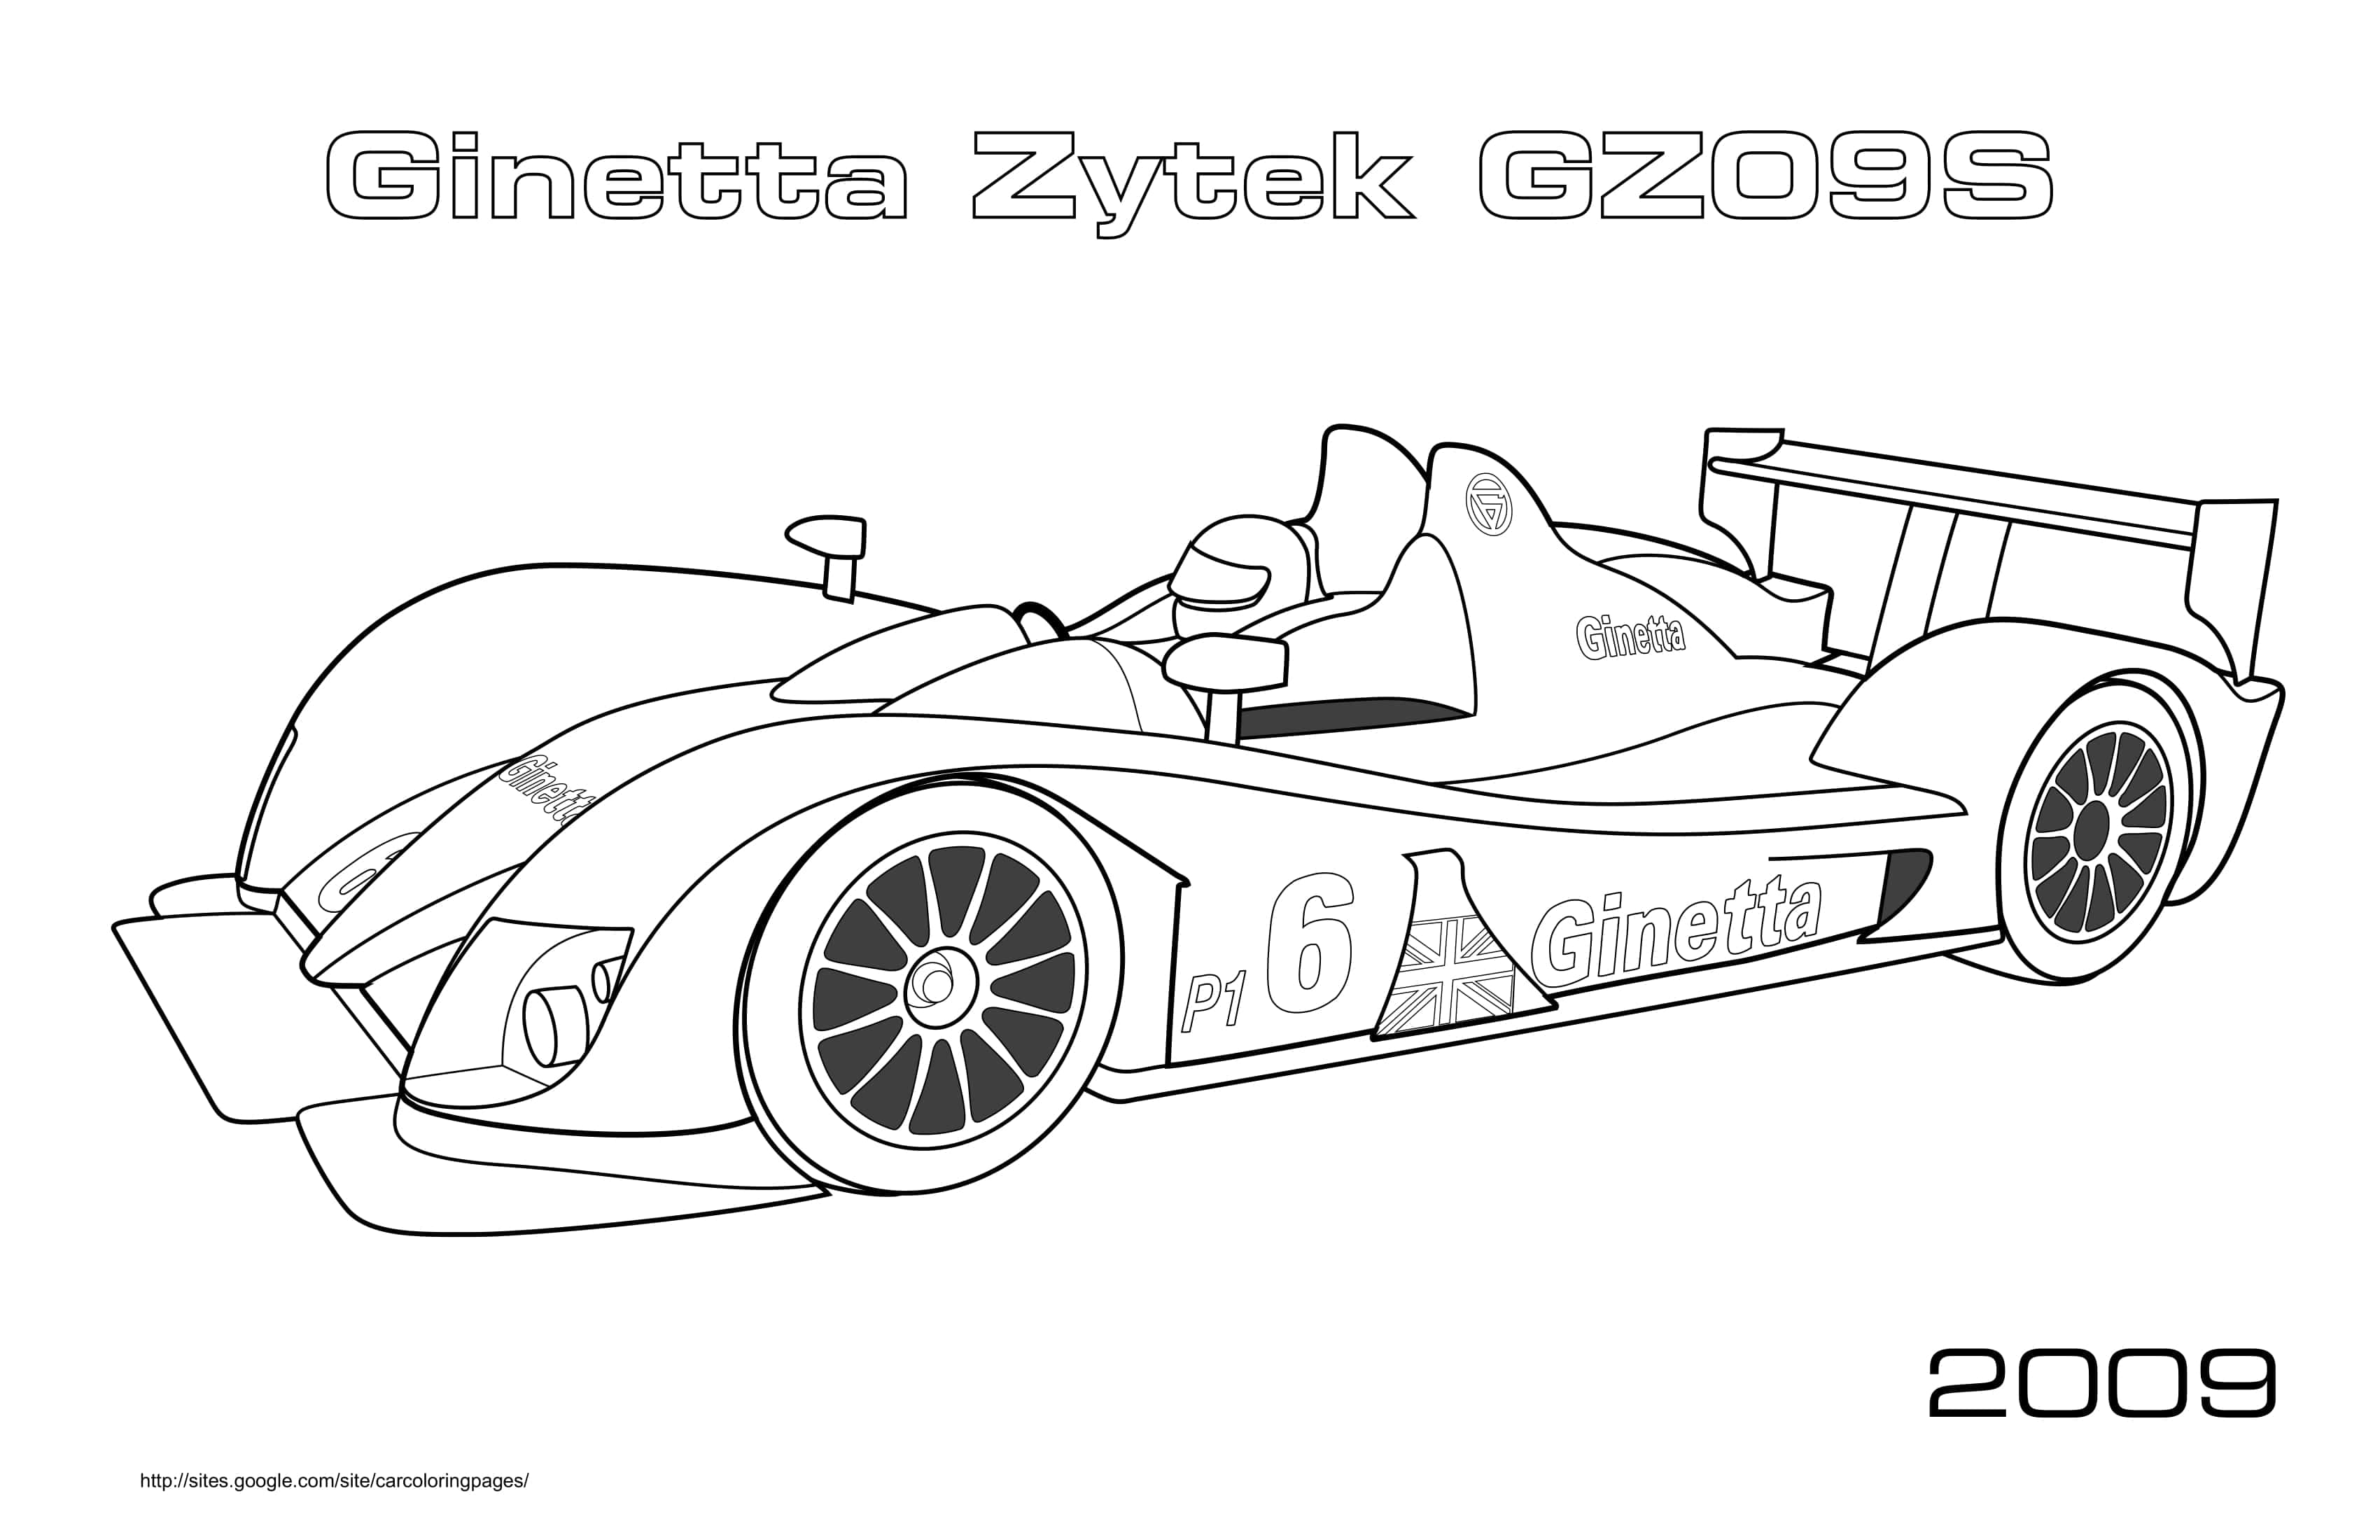 F1 Ginetta Zytek Gz09s 2009 Coloring Page